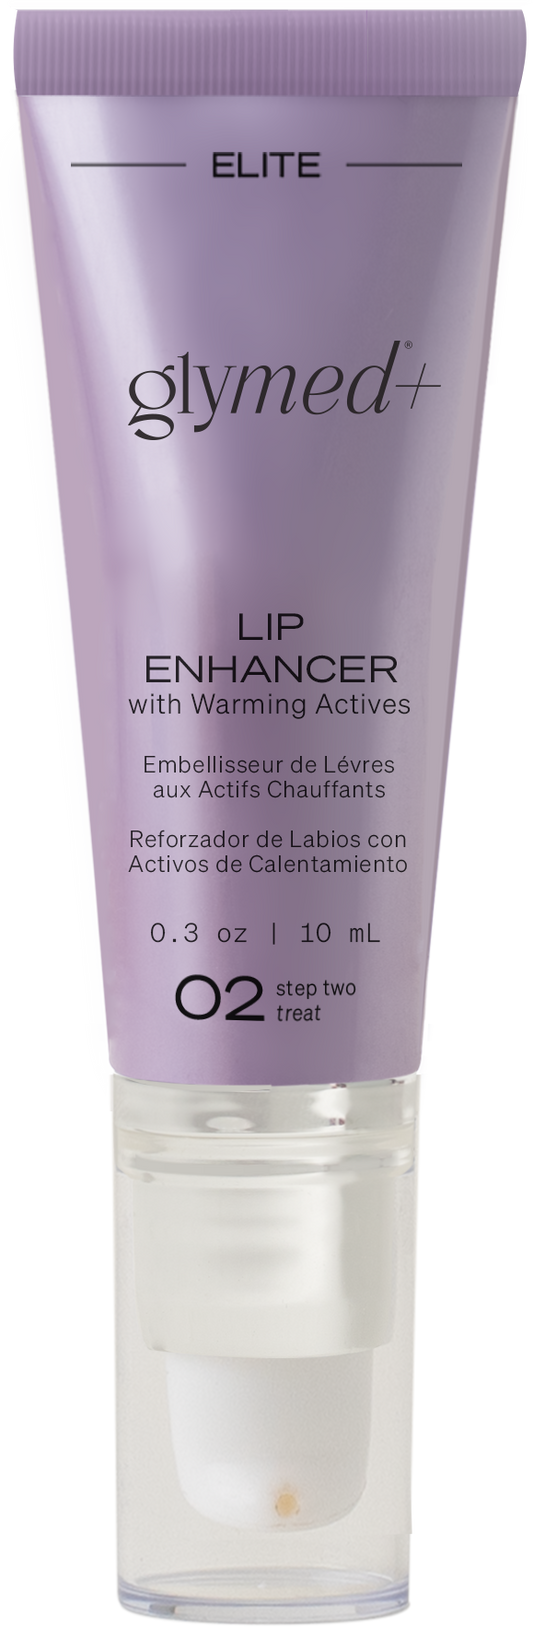 Lip Enhancer with Warming Actives